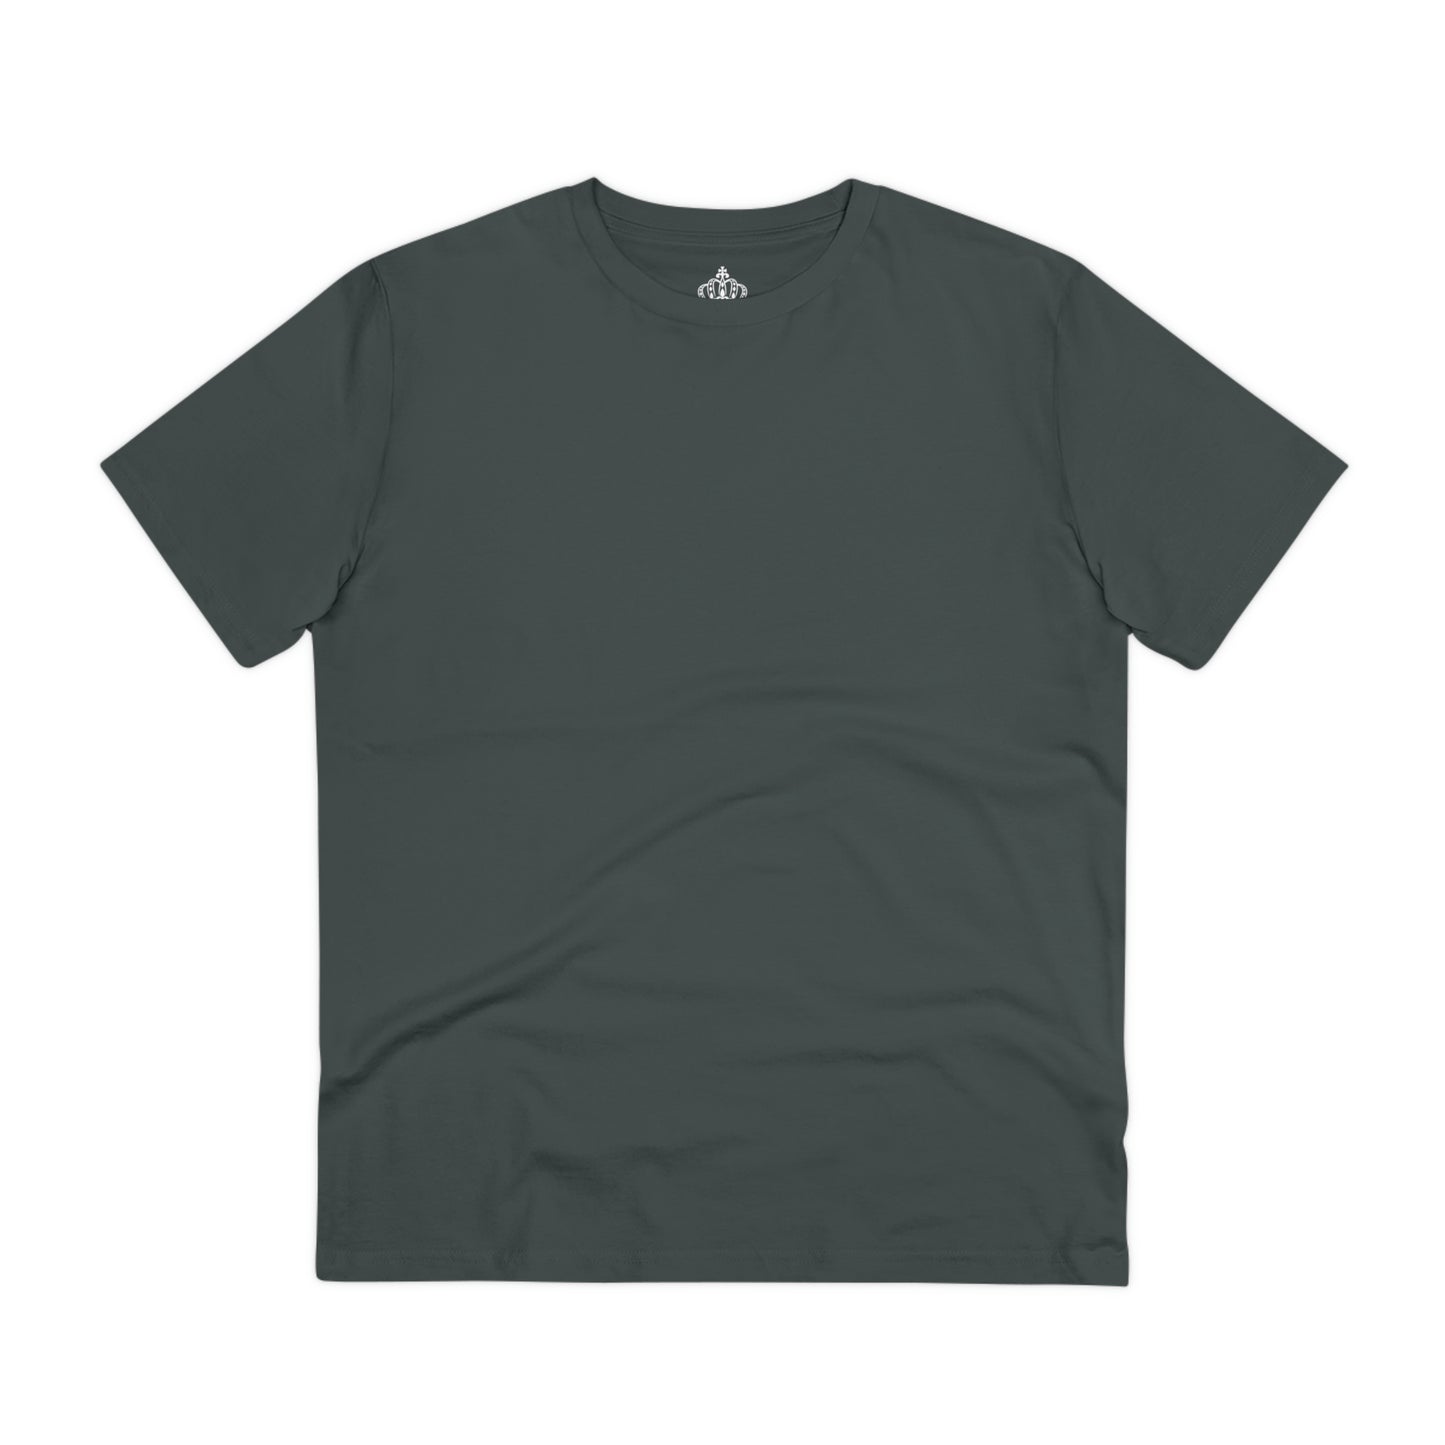 Anthracite Grey - Organic Creator T-shirt - Unisex